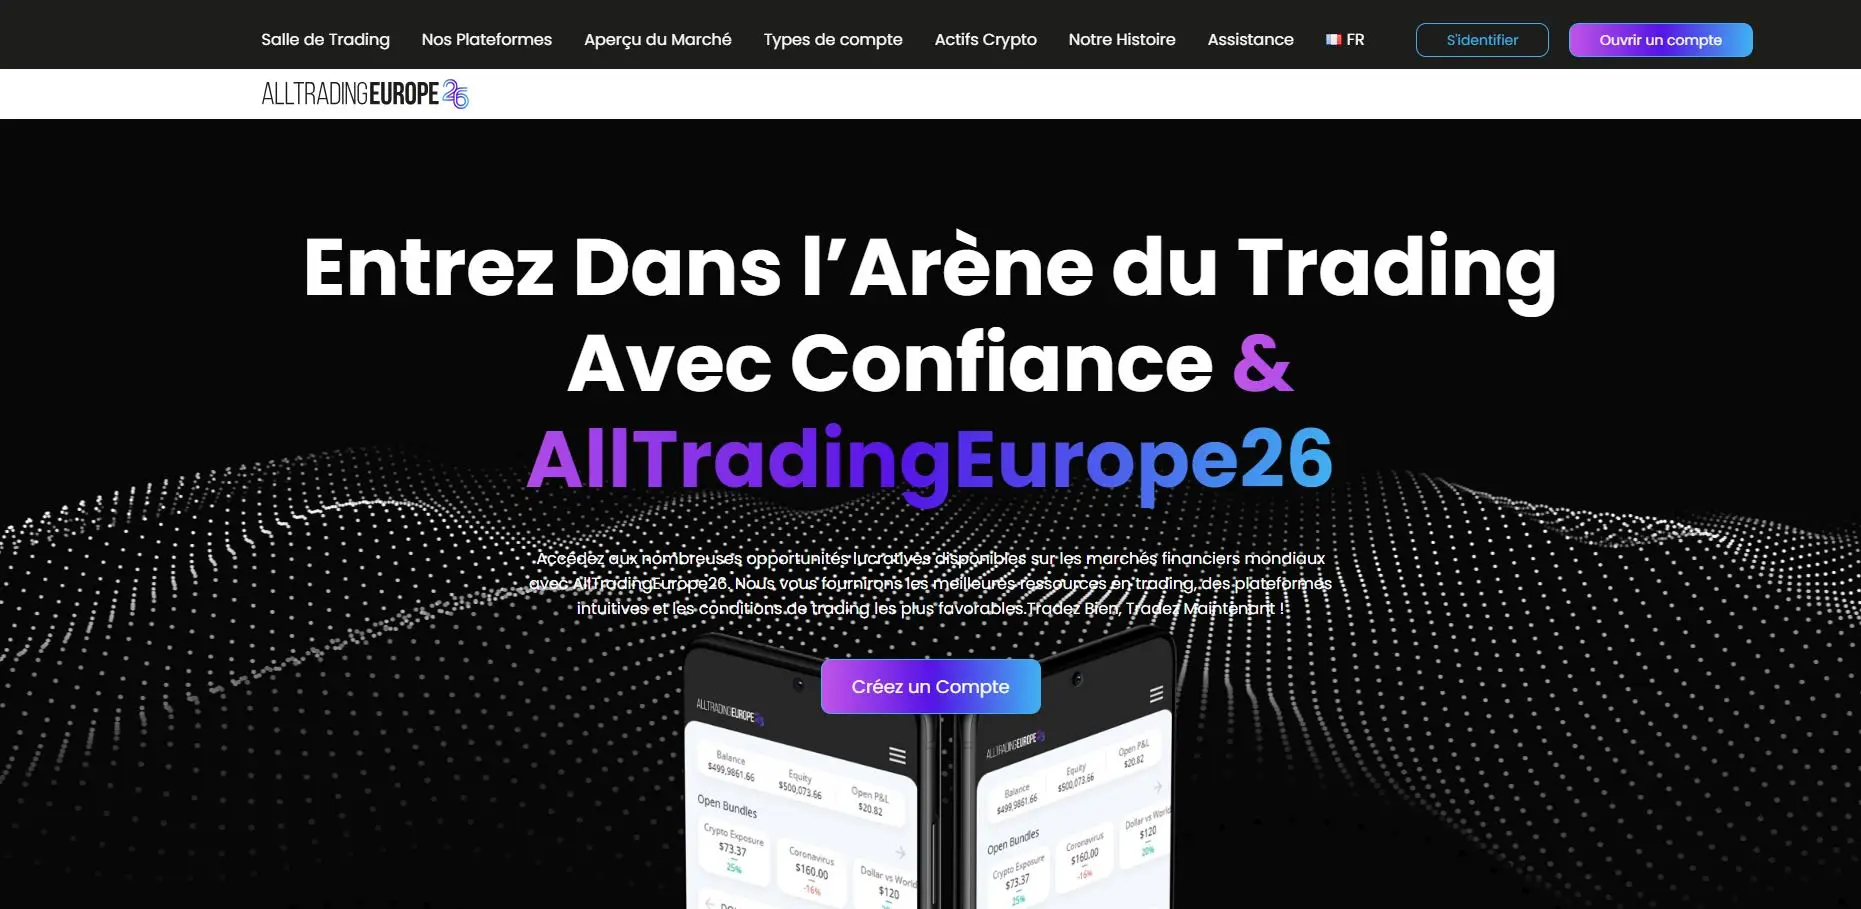 alerte plateforme arnaque trading forex cryptomonnaies